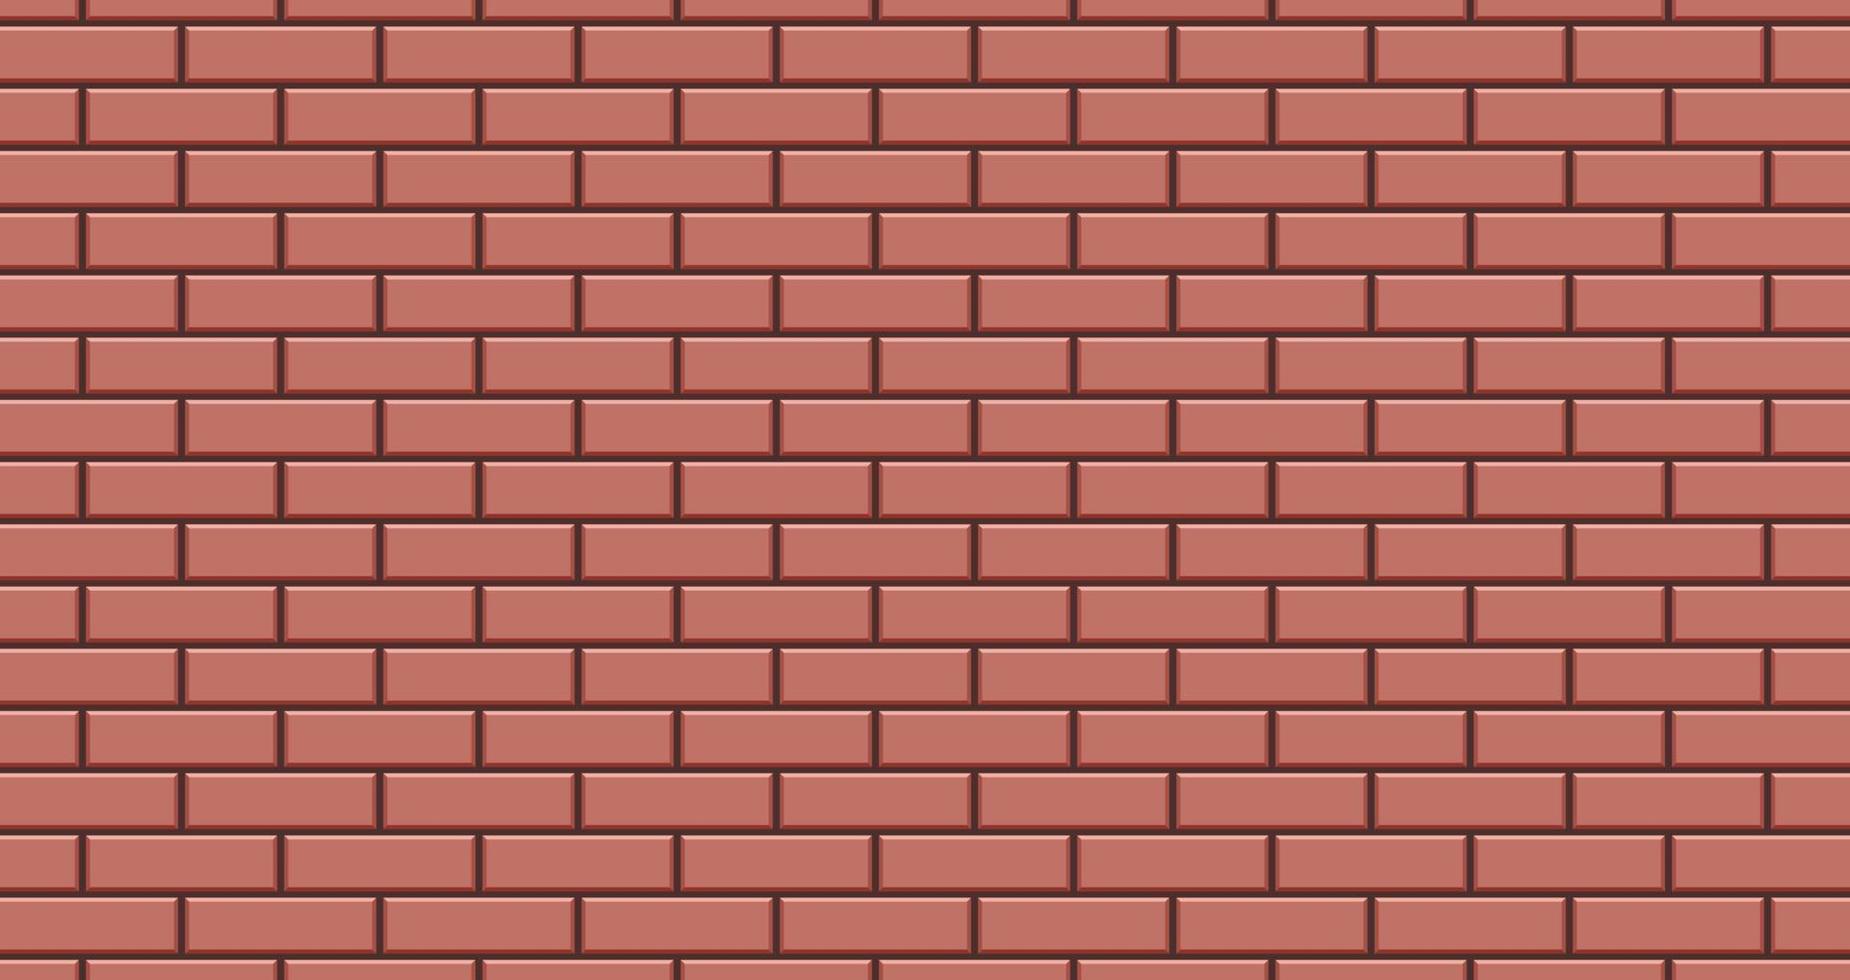 Brick wall background illustration vector